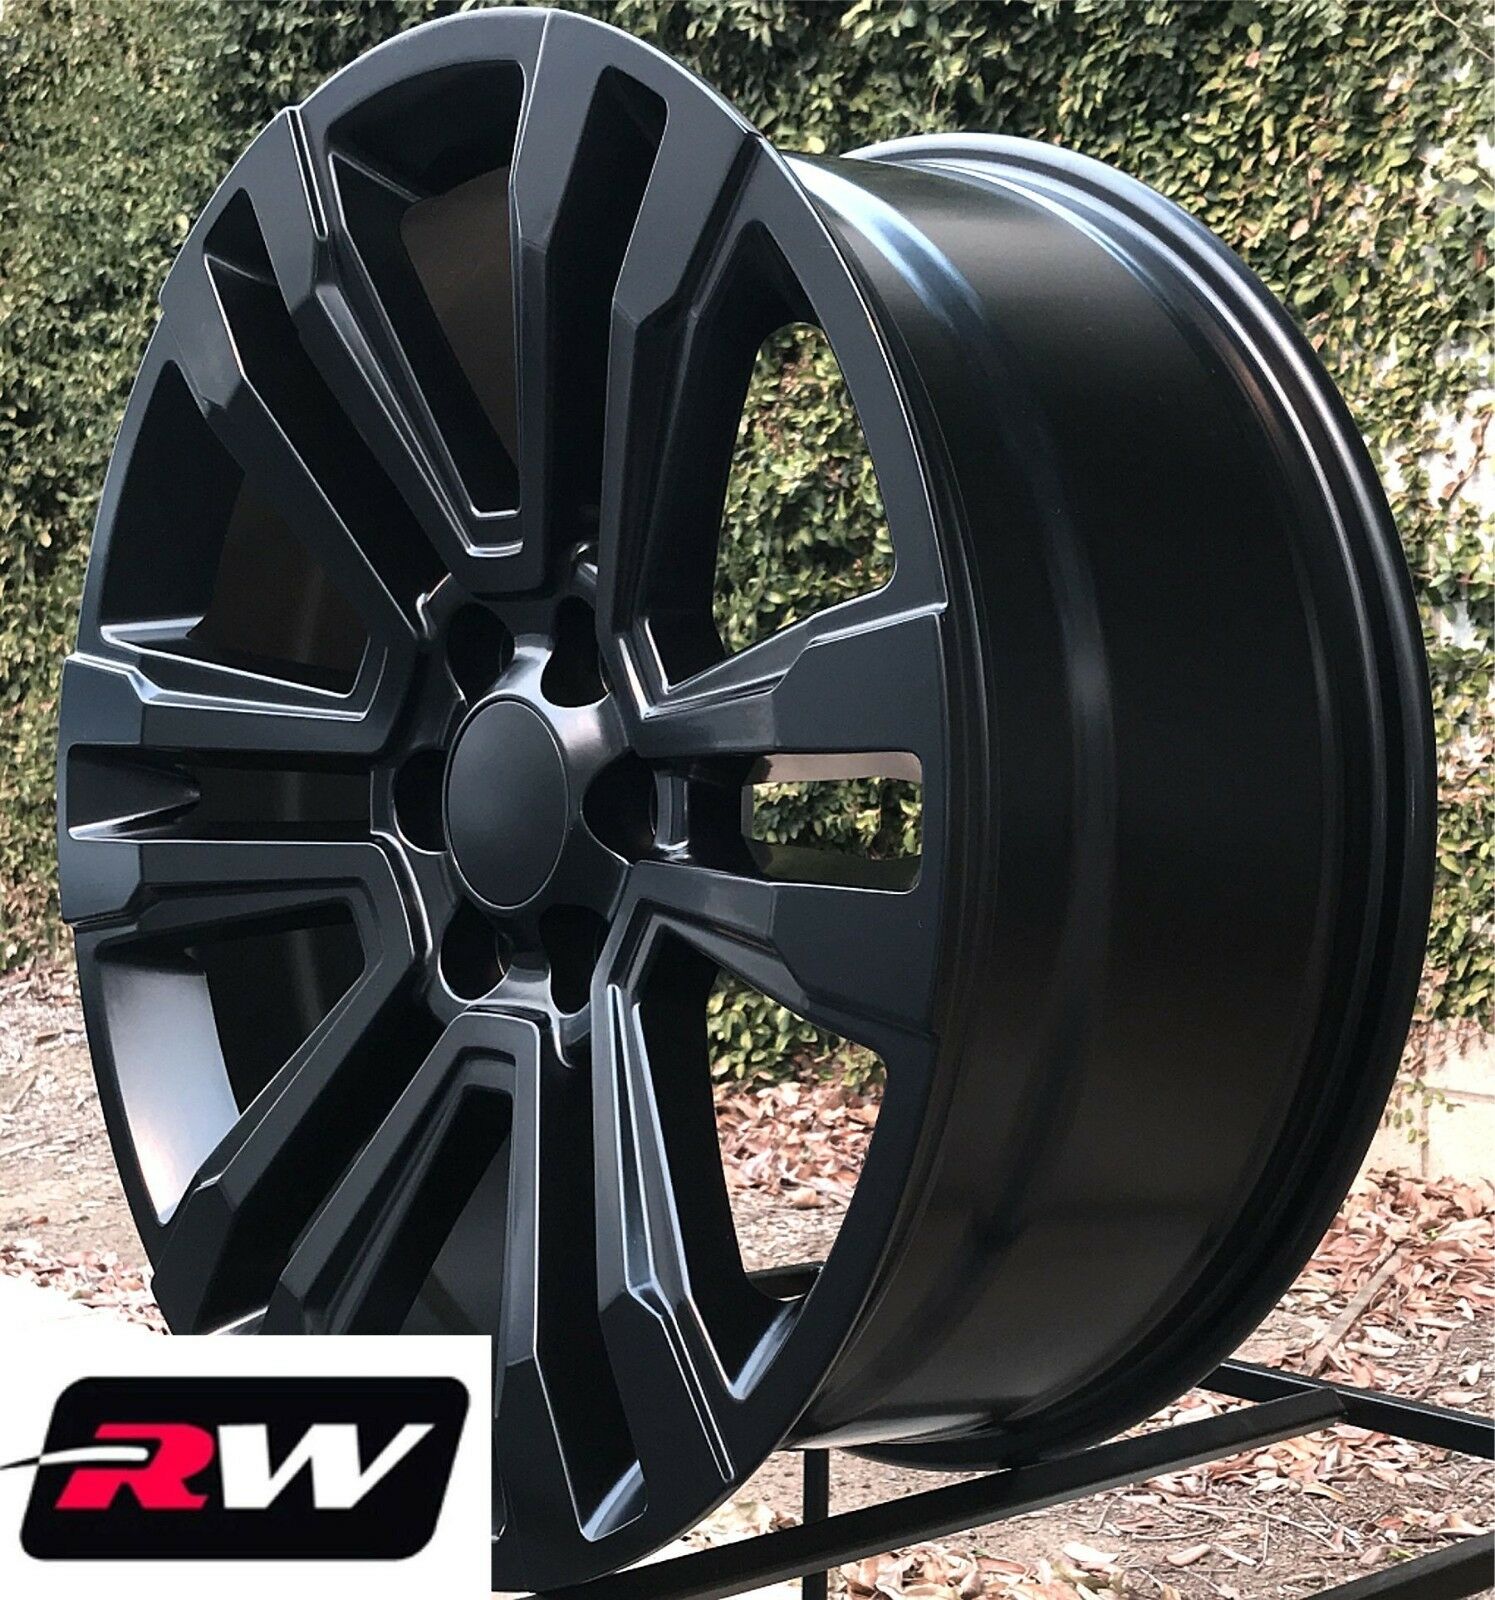 22 inch RW 2017 2018 Denali Wheels for Chevy Truck Satin Black Rims ...